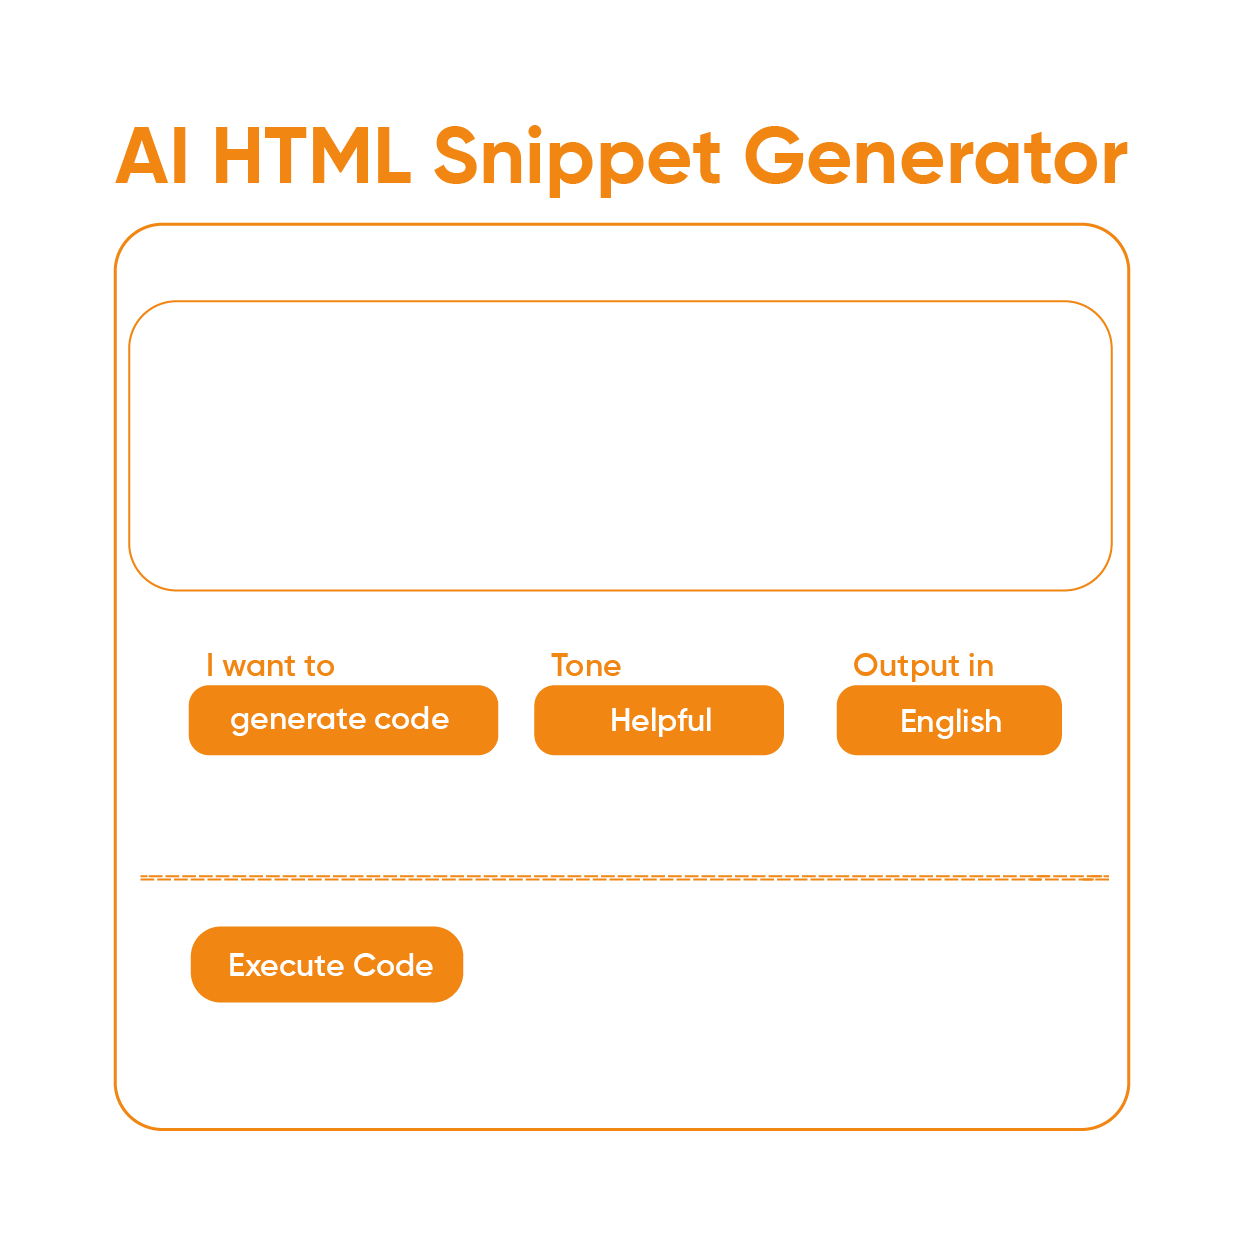 Ettvi's AI HTML Snippet